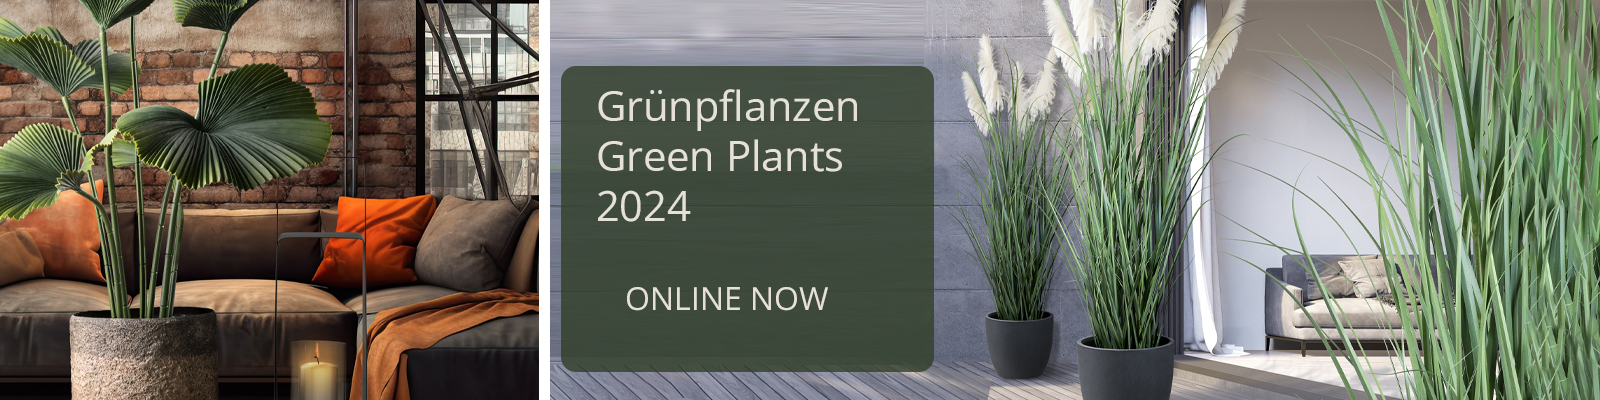 Green Plants